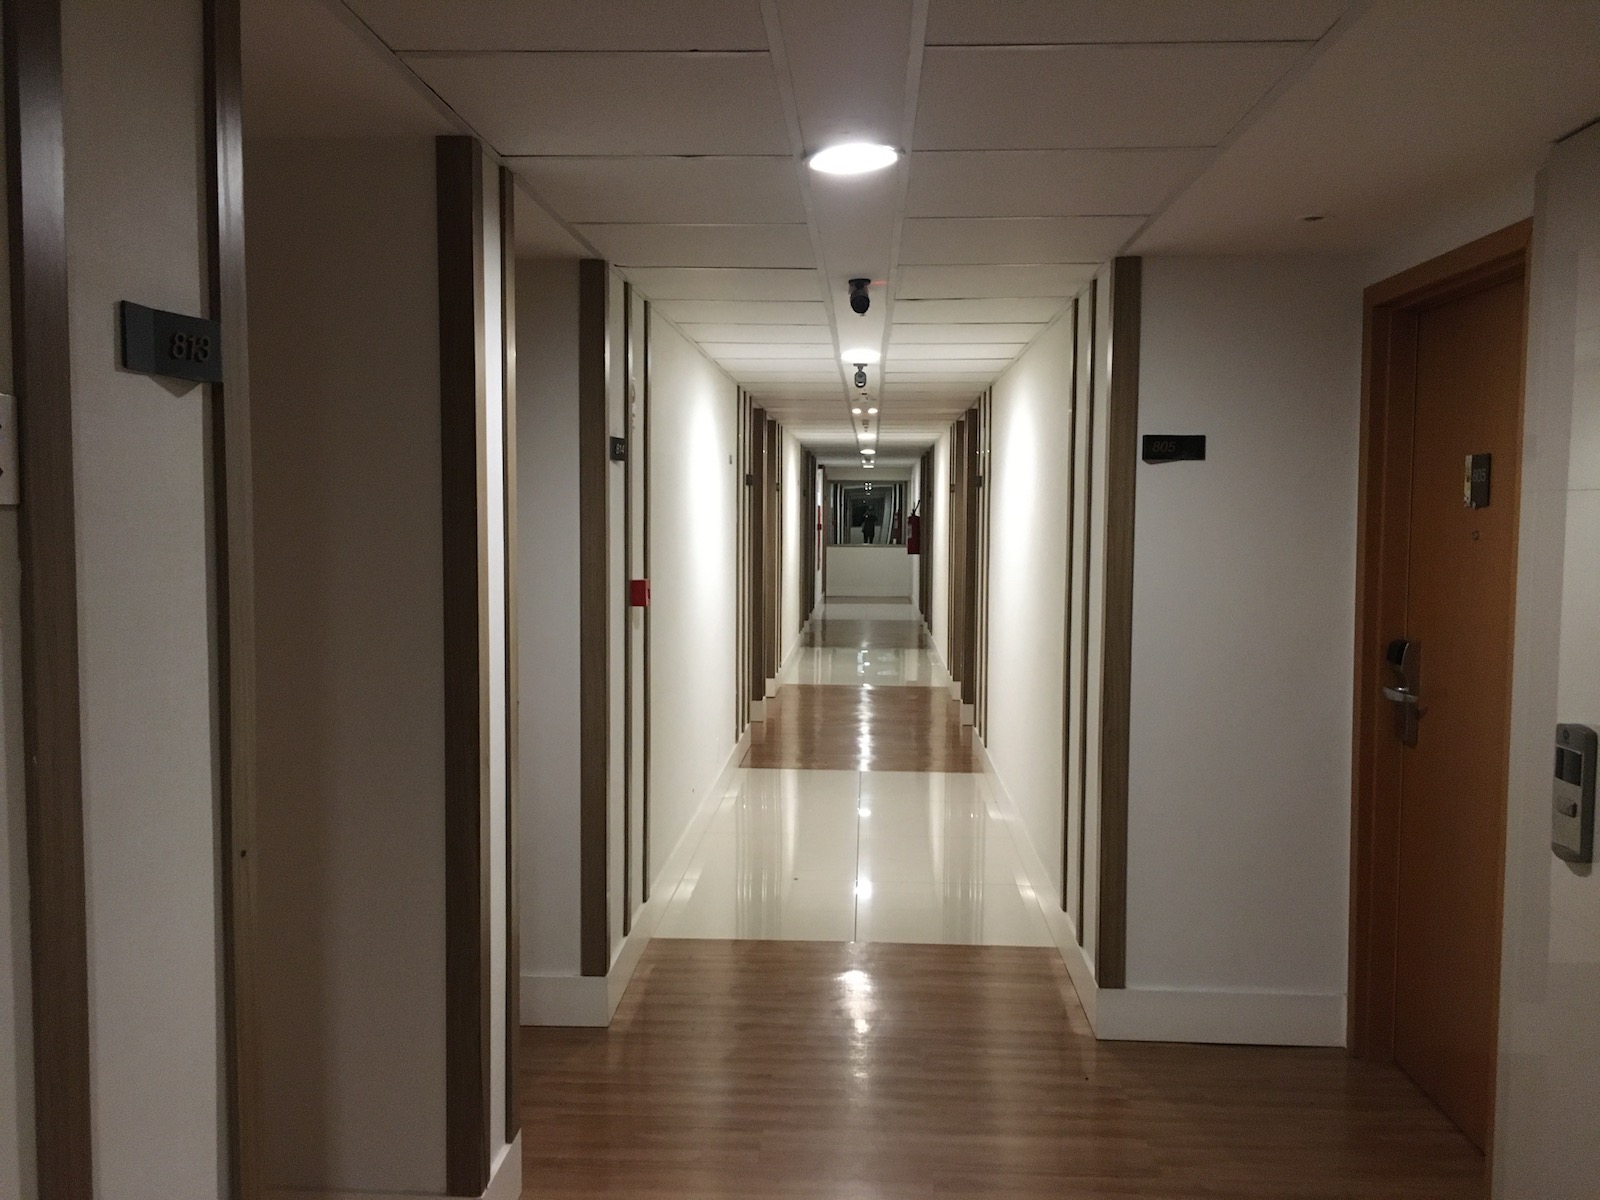 The hallway has reduced lighting